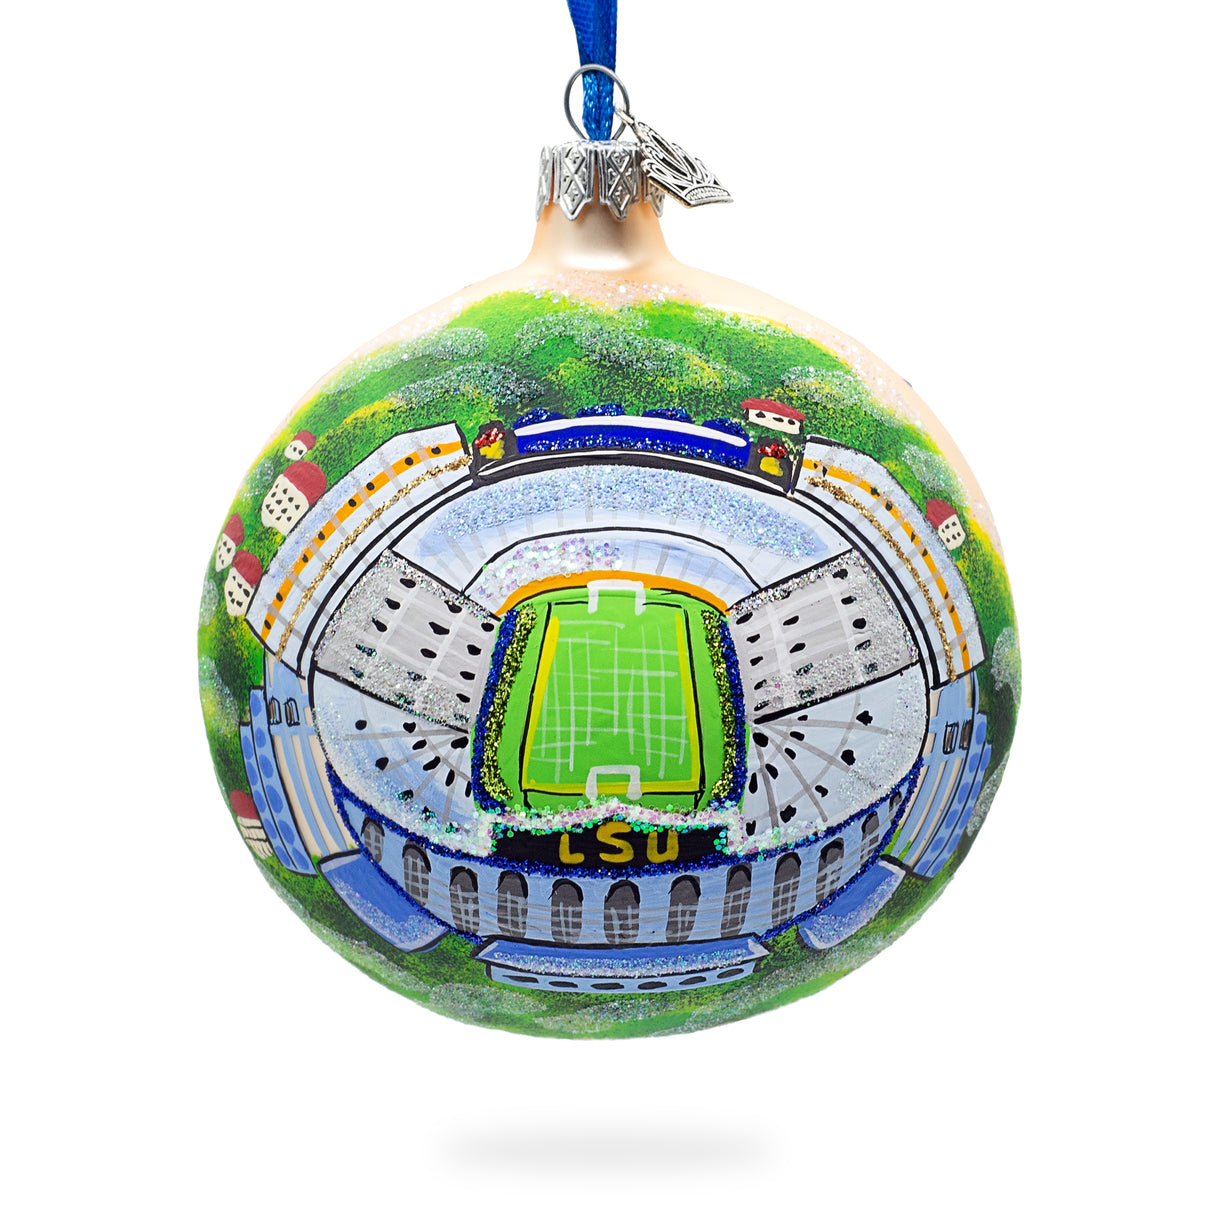 LSU Tiger Stadium, Baton Rouge, Louisiana, USA Glass Ball Christmas Ornament 4 Inches in Multi color, Round shape